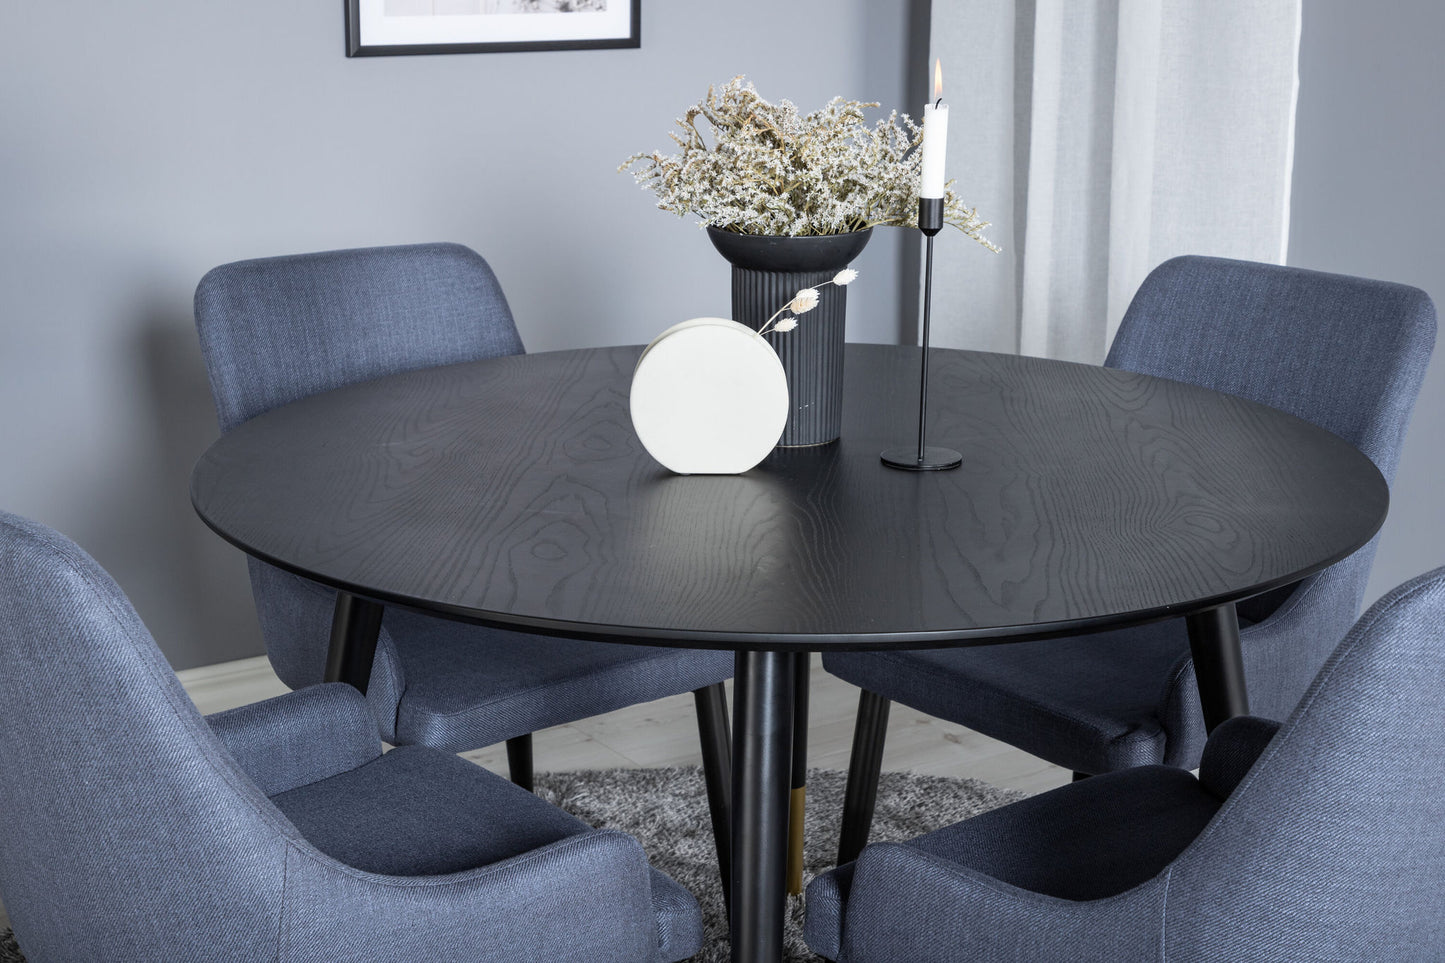 Dipp - Spisebord, 115cm - Sort Messing+ Plaza Spisebordsstol - Sorte ben - Blåt stof